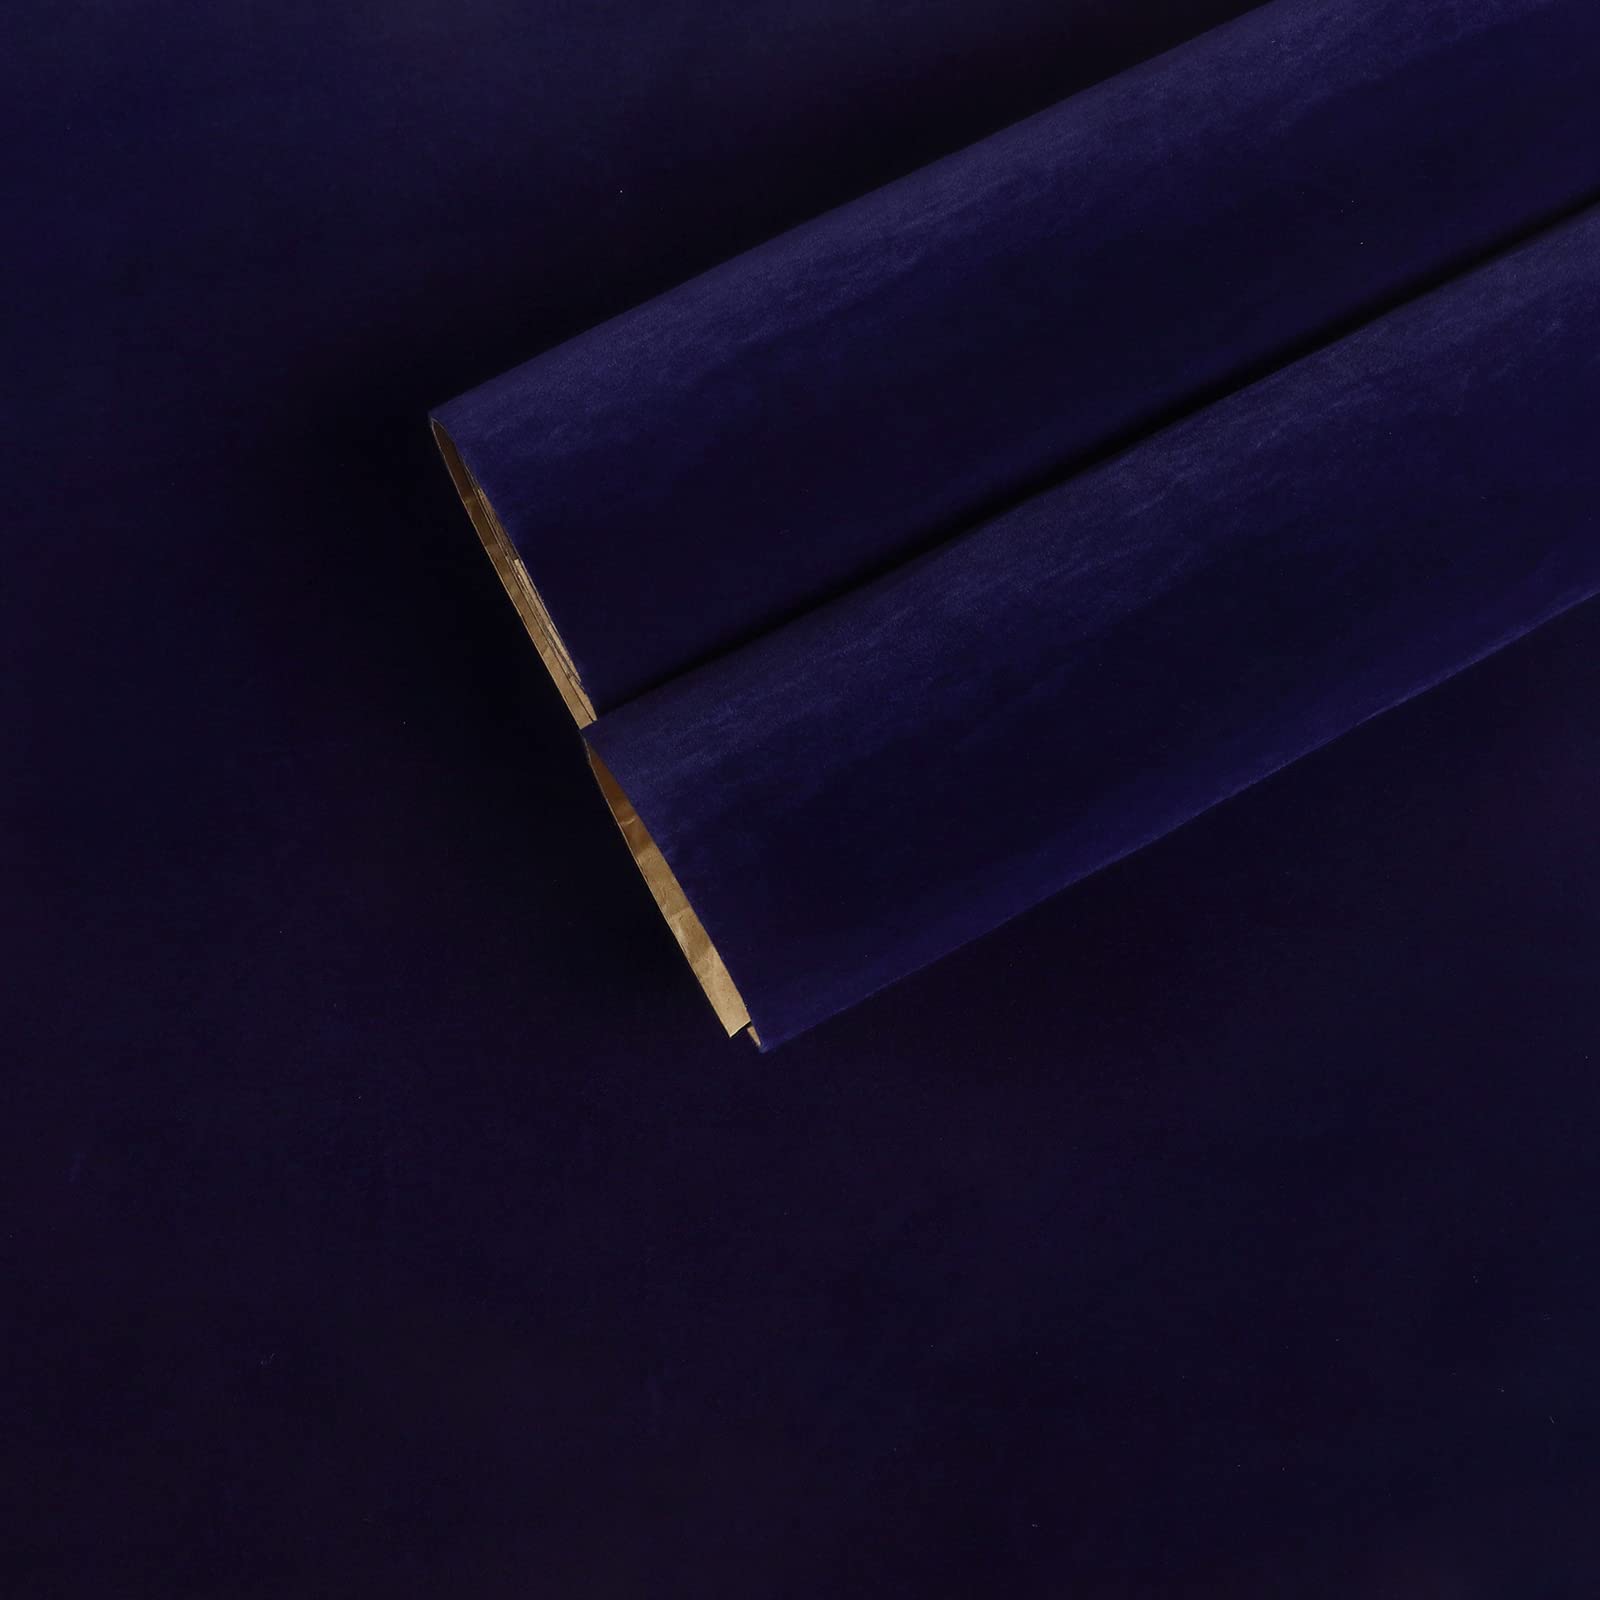 CHIHUT Dark Blue Self Adhesive Velvet Drawer Liner for Jewelry Dresser Velvet Wallpaper Peel and Stick Velvet Flocking Liner Soft Felt Fabric Contact Paper for Jewelry Box Liner DIY Craft 17.7''x236''